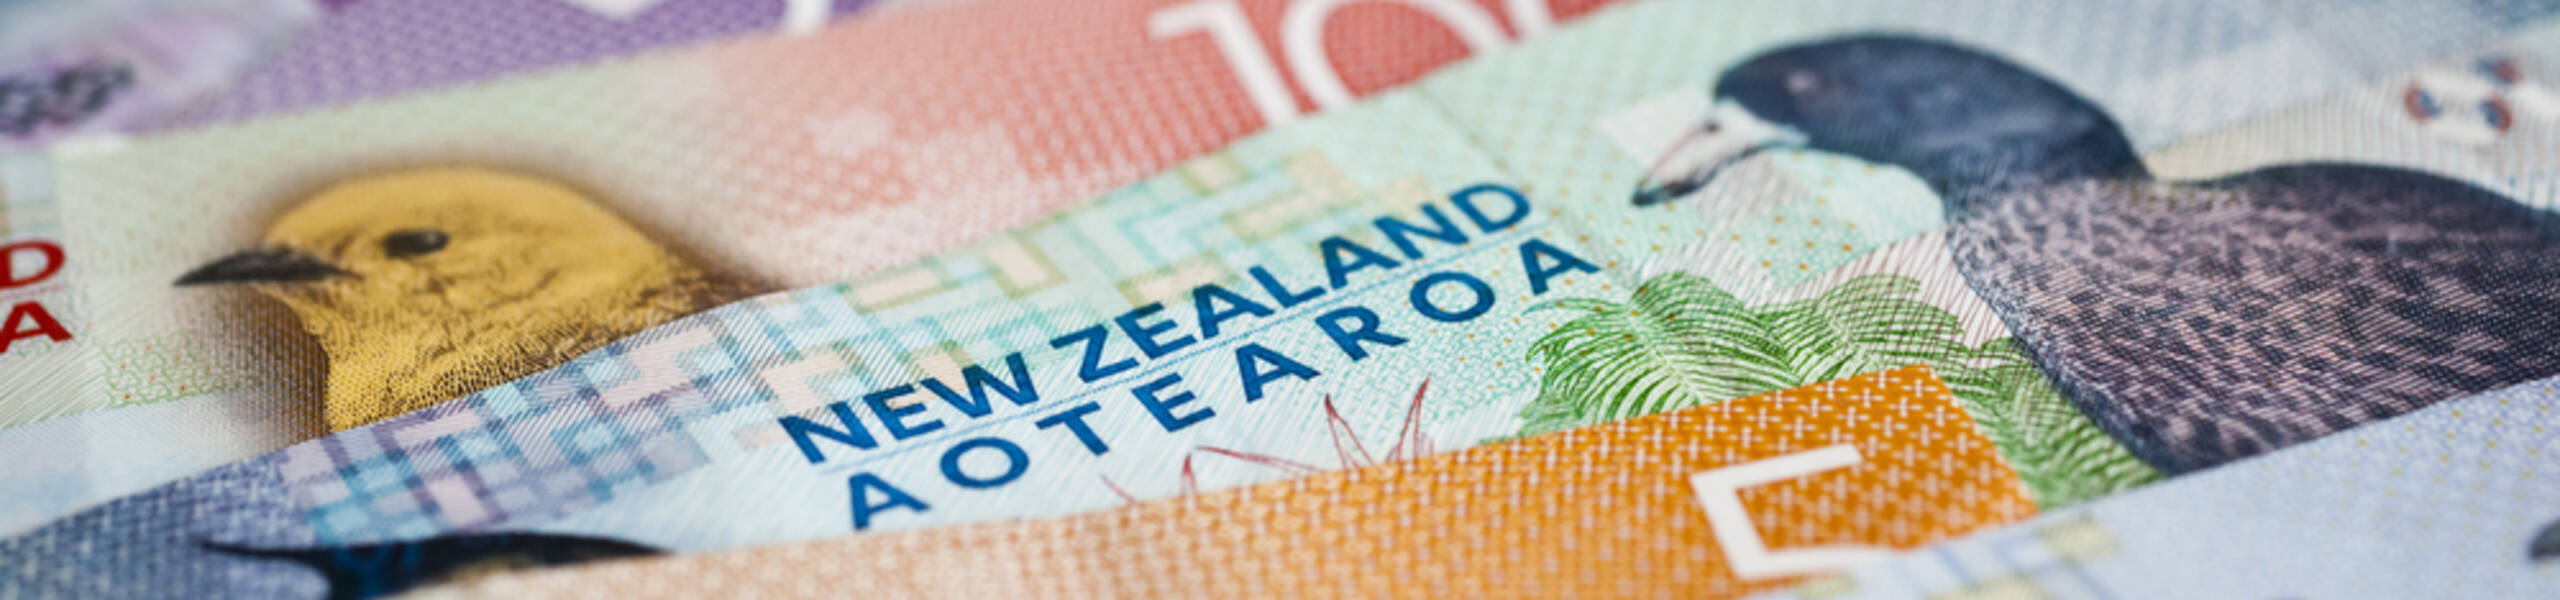 NZD/USD: a strong NZD